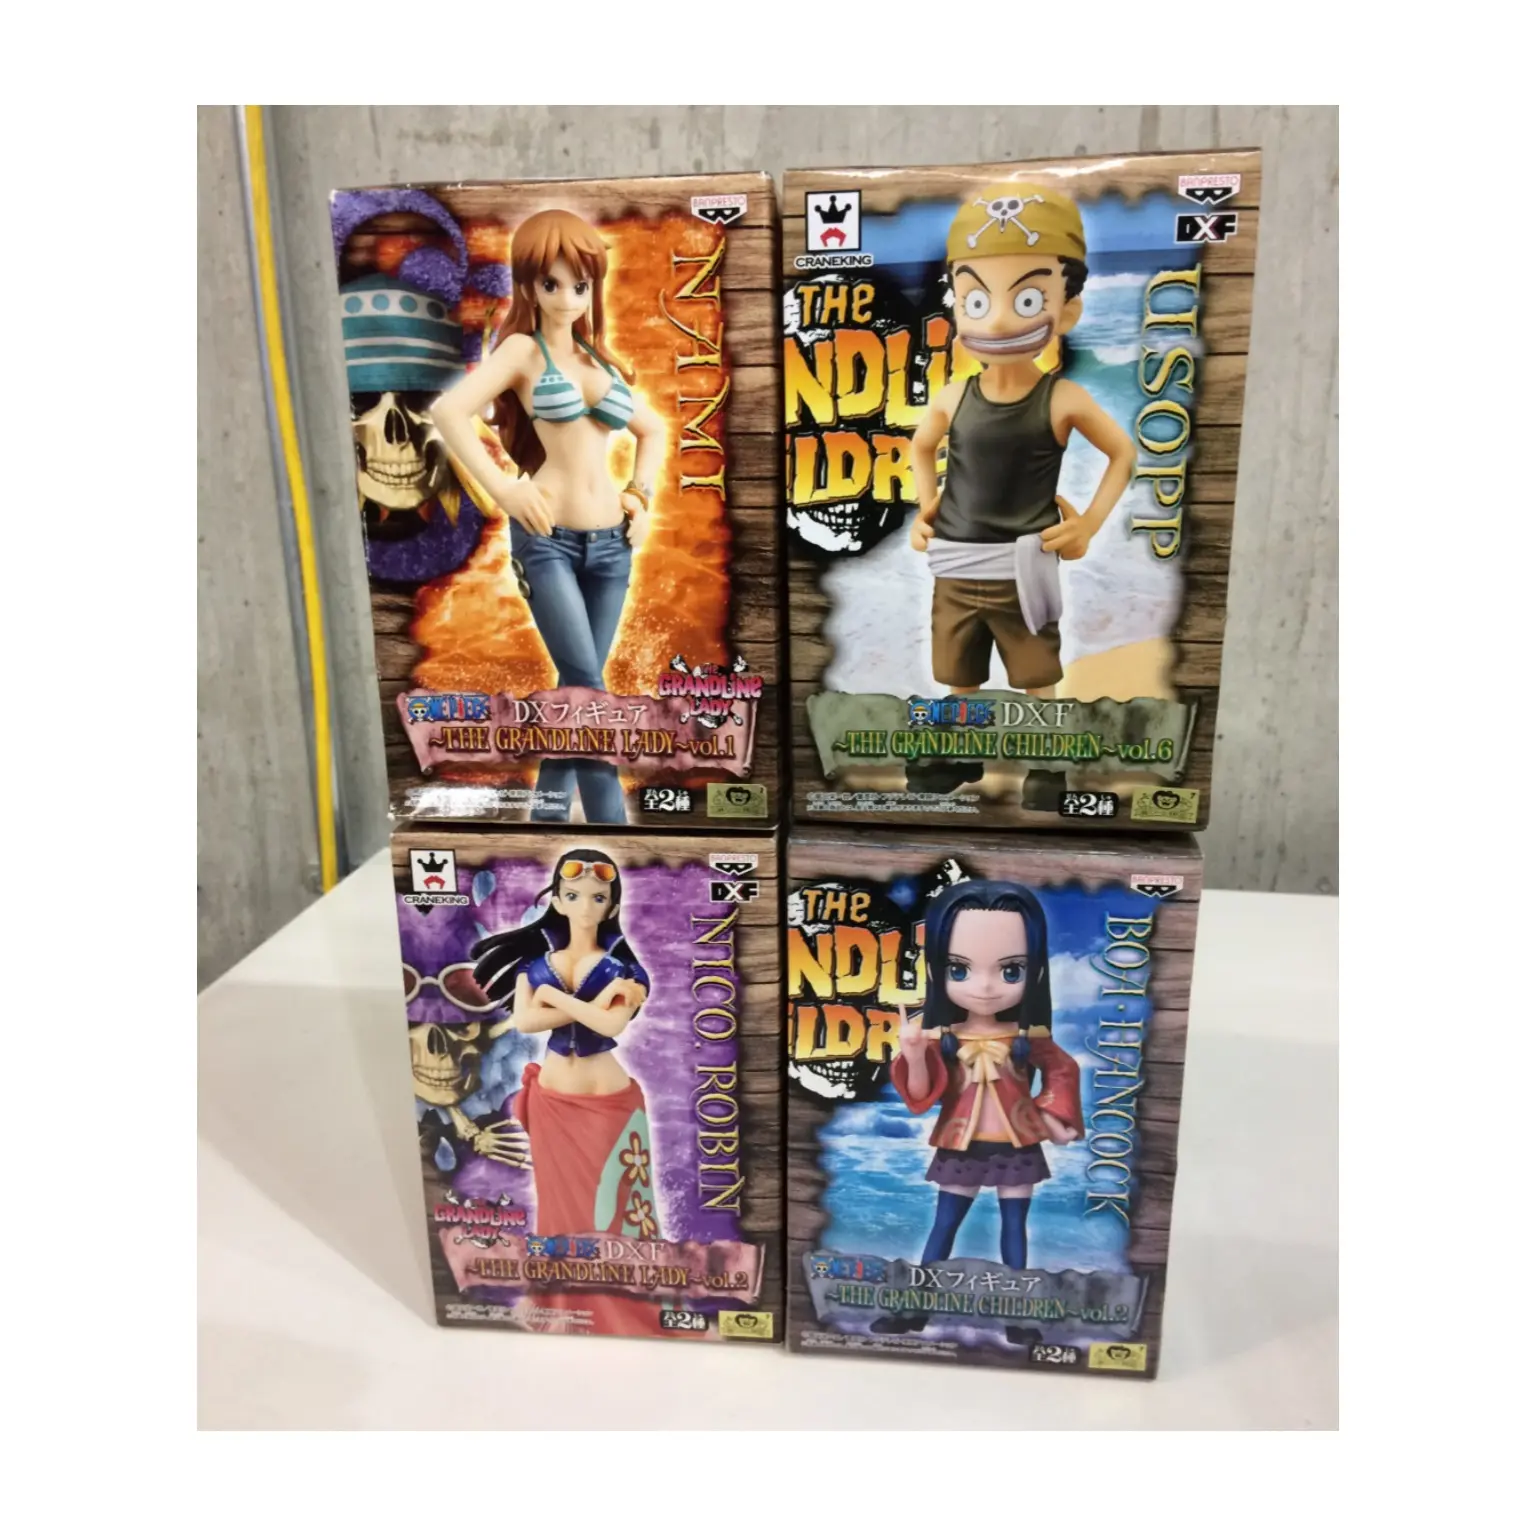 Hohe Popularität Japan Anime PVC Figur als Preis Artikel in Boxen verkauft